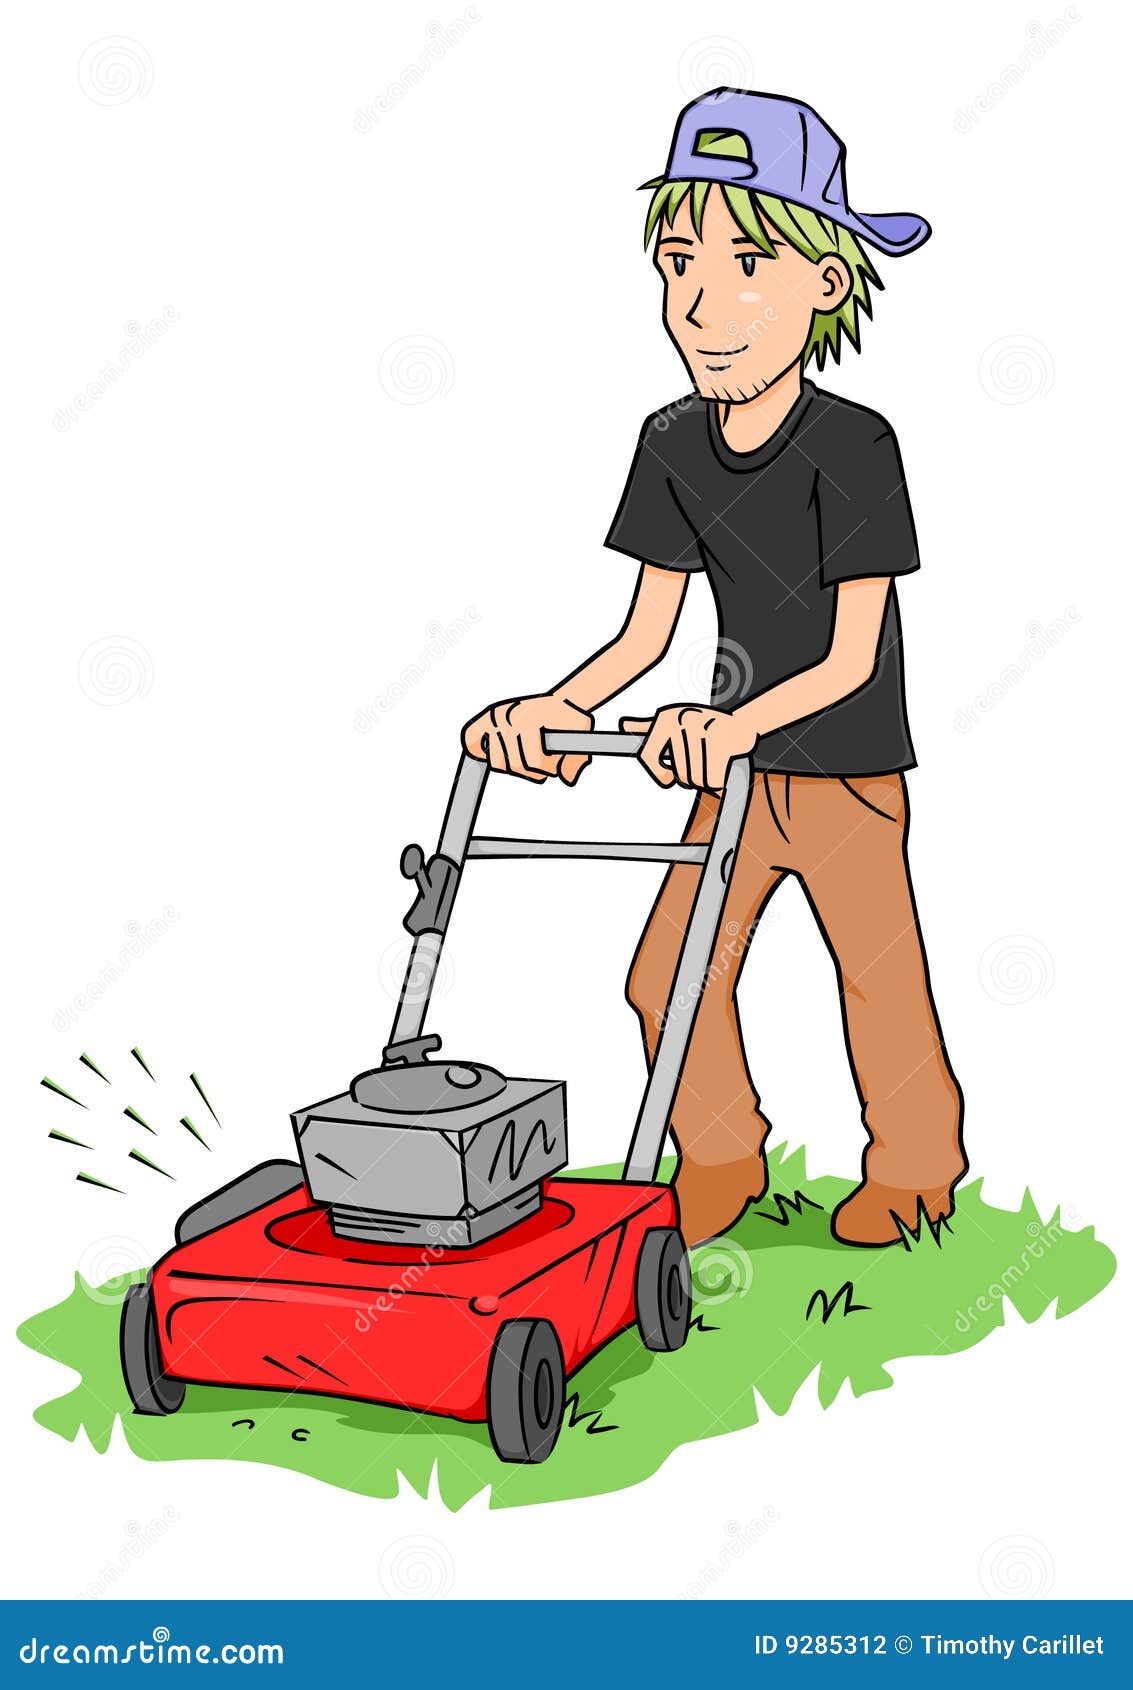 clipart lawnmower man - photo #17